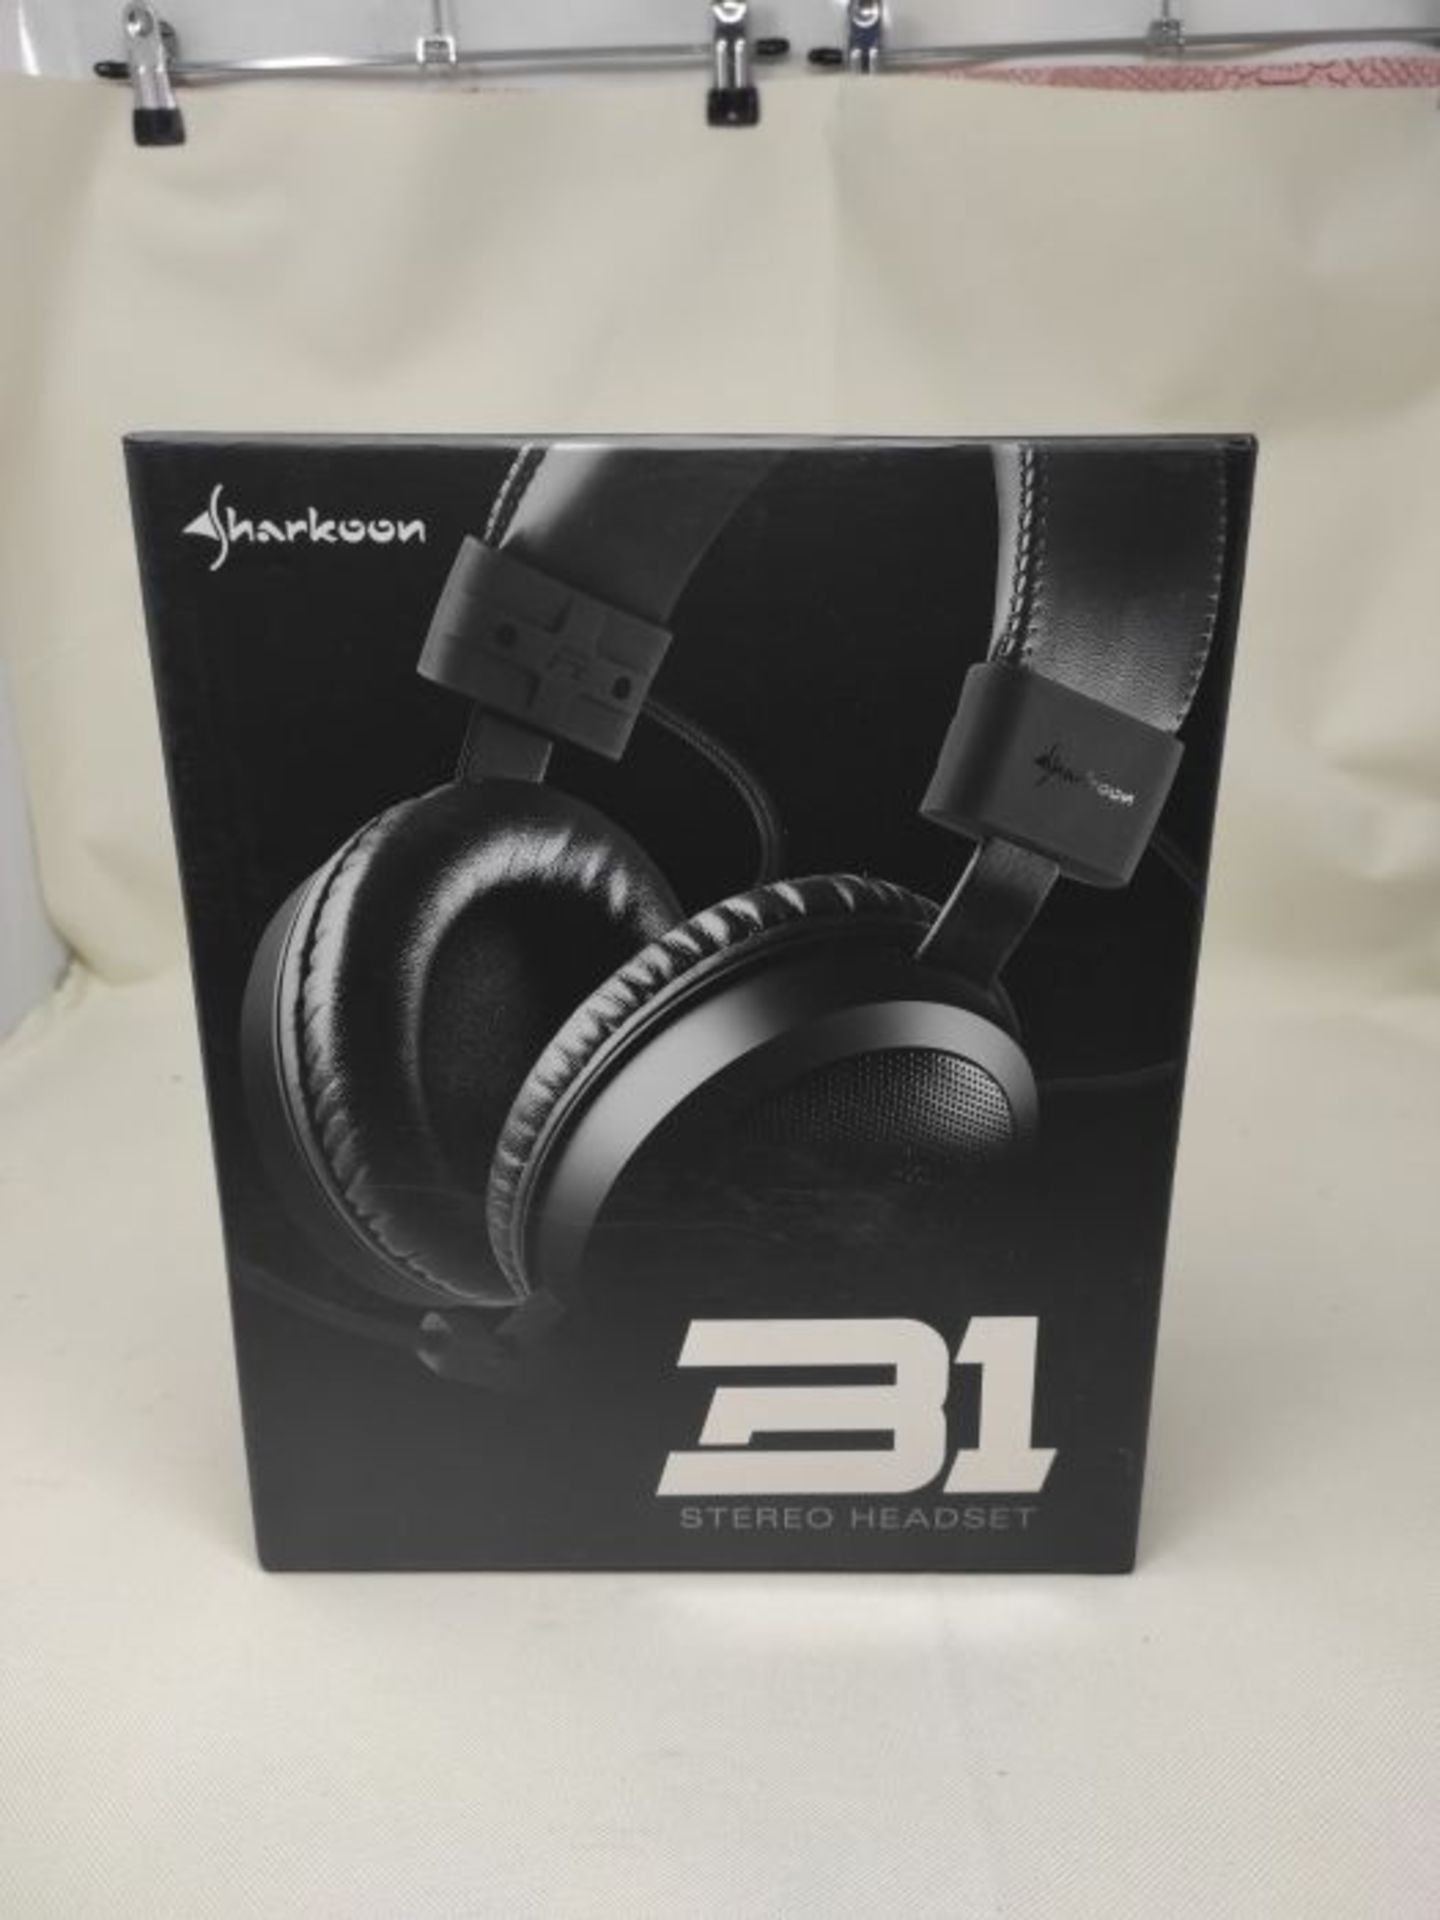 Sharkoon B1 Stereo Gaming Headphones - Black - Image 2 of 3